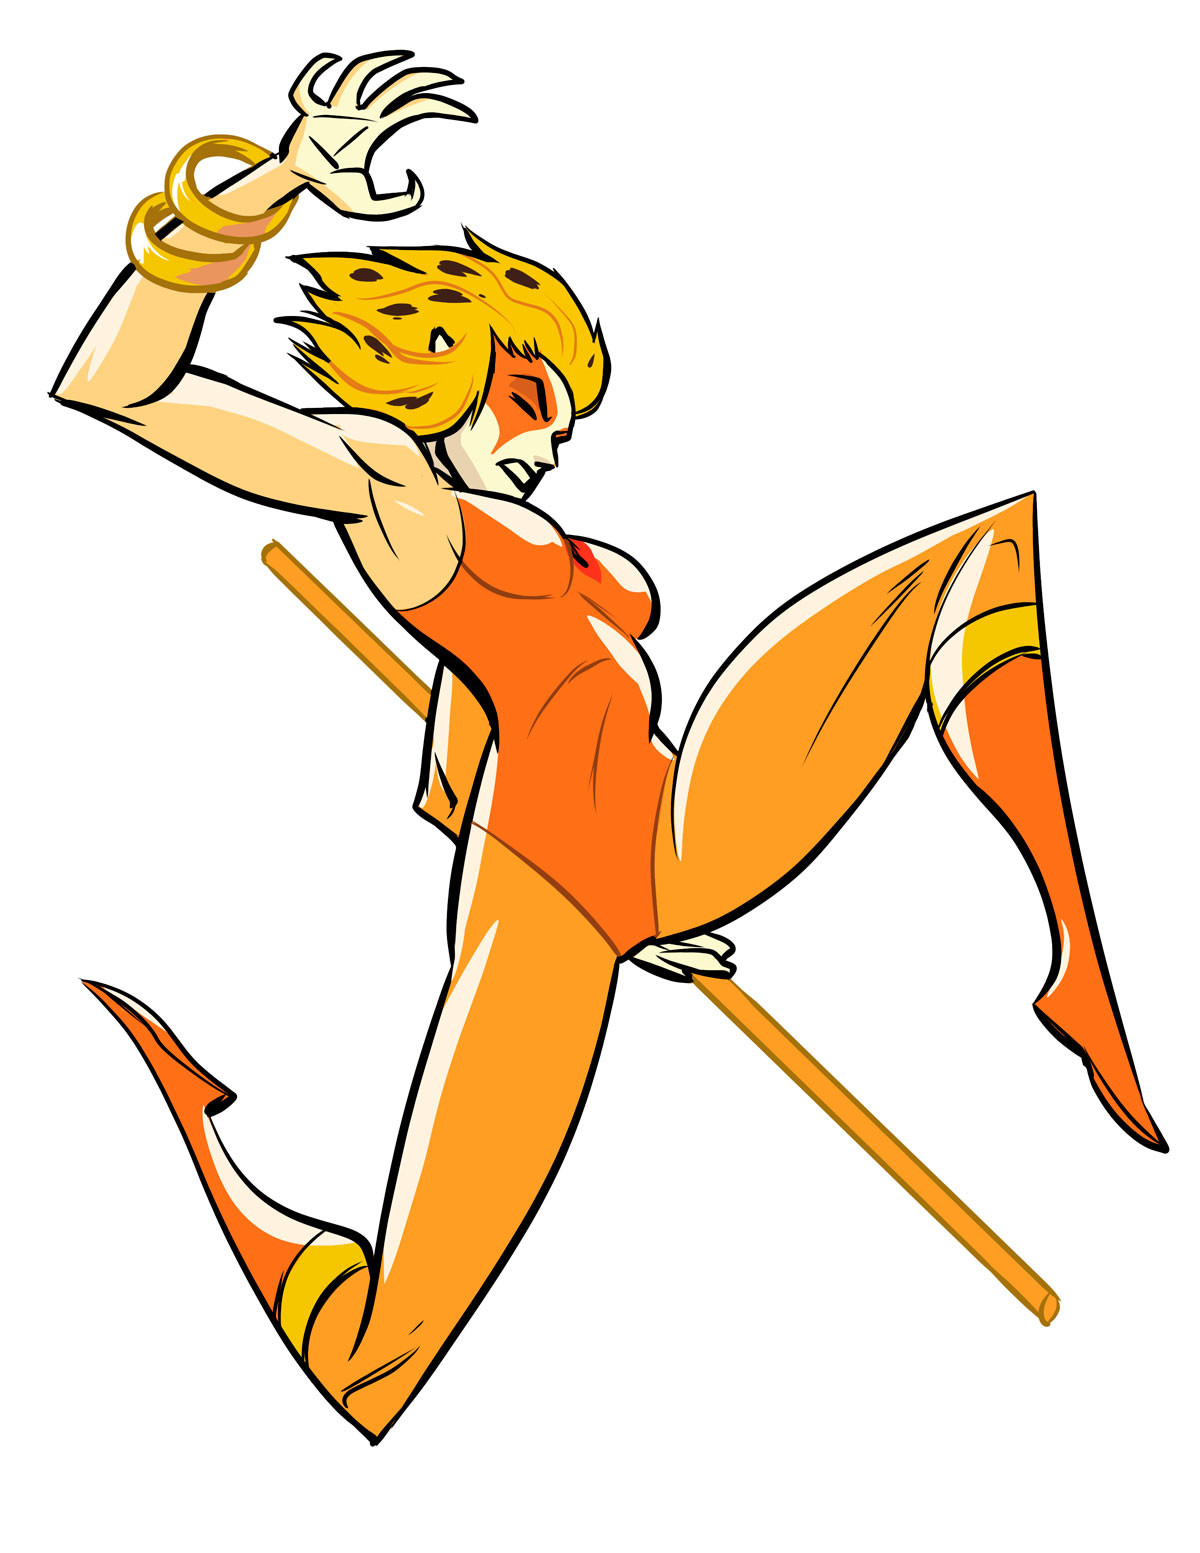 ArtStation - retro female cartoon characters exercise